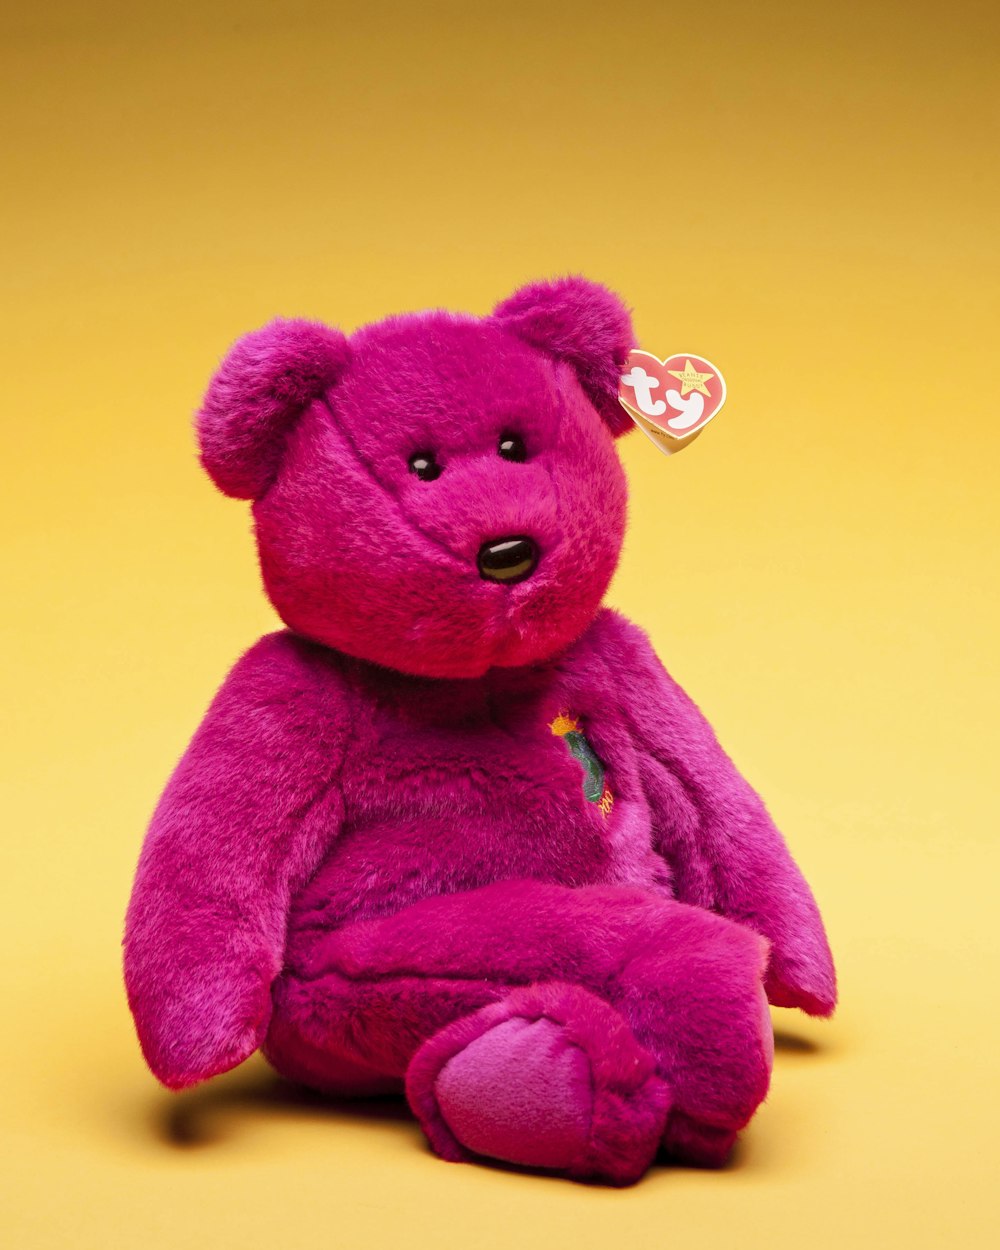 pink bear plush toy on yellow surface